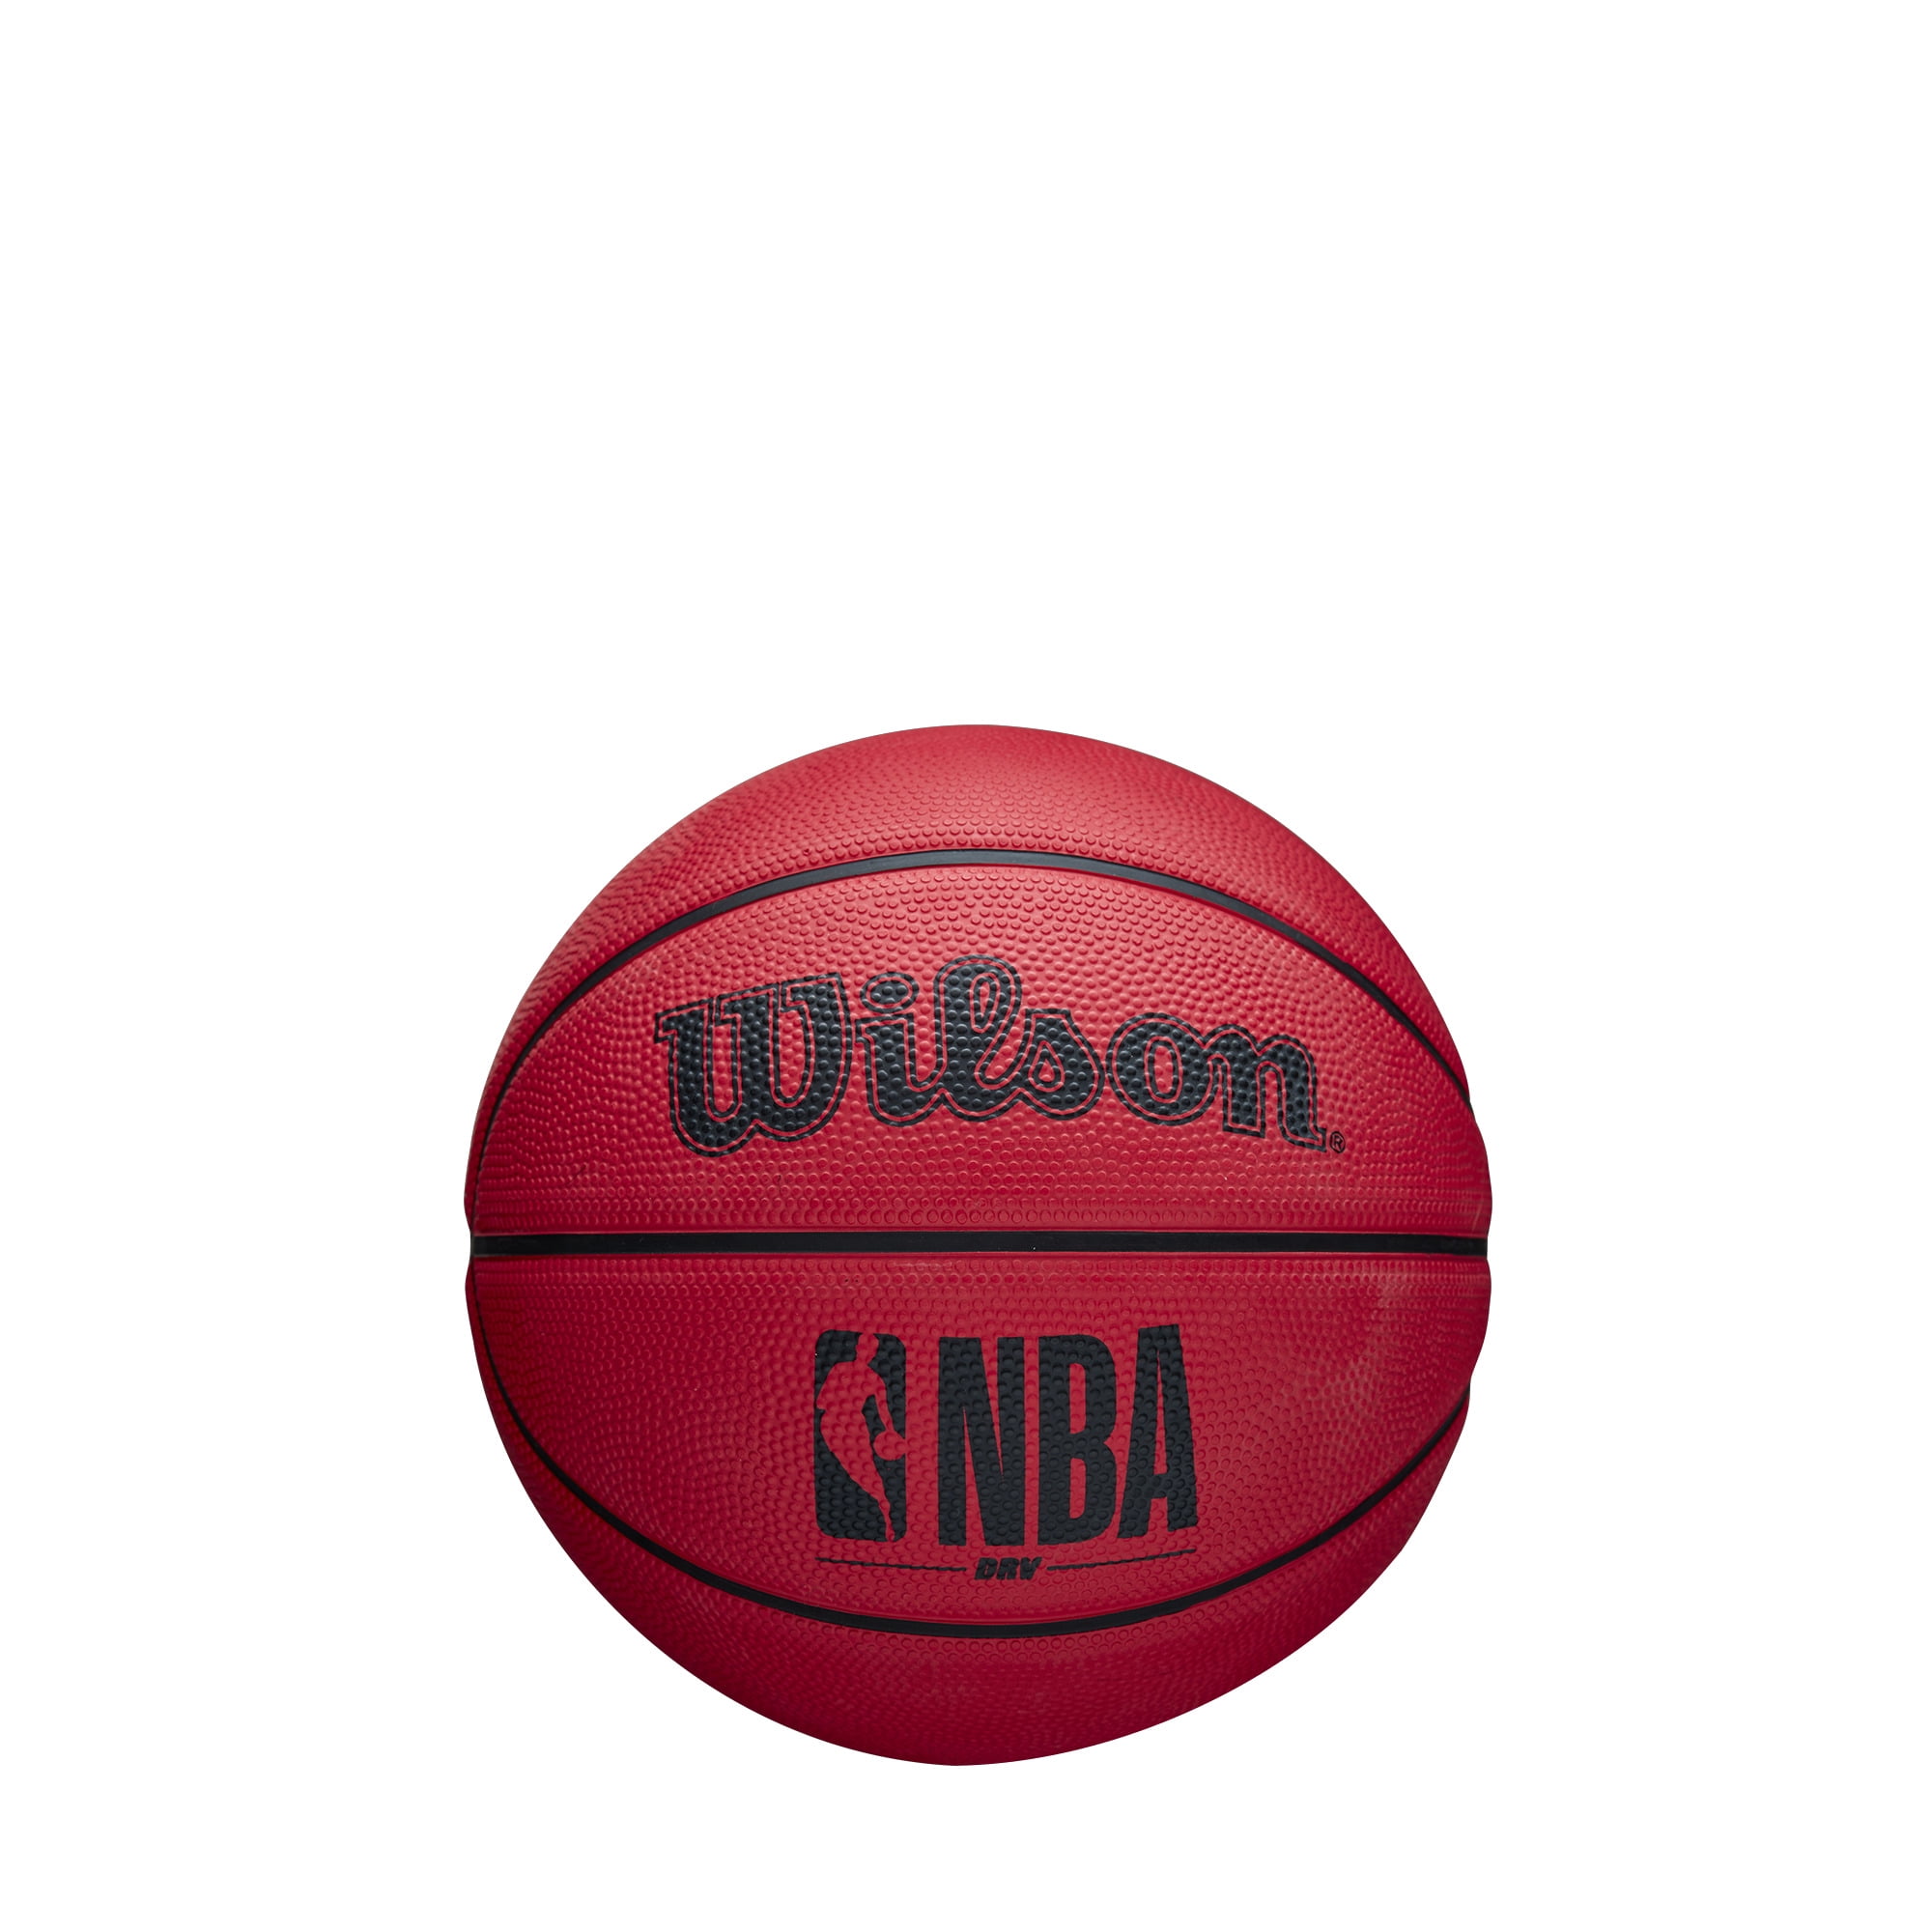 Details about   Baden Basketball Official Size 29.5” basket ball Brown SX700 Indoor outdoor spor 